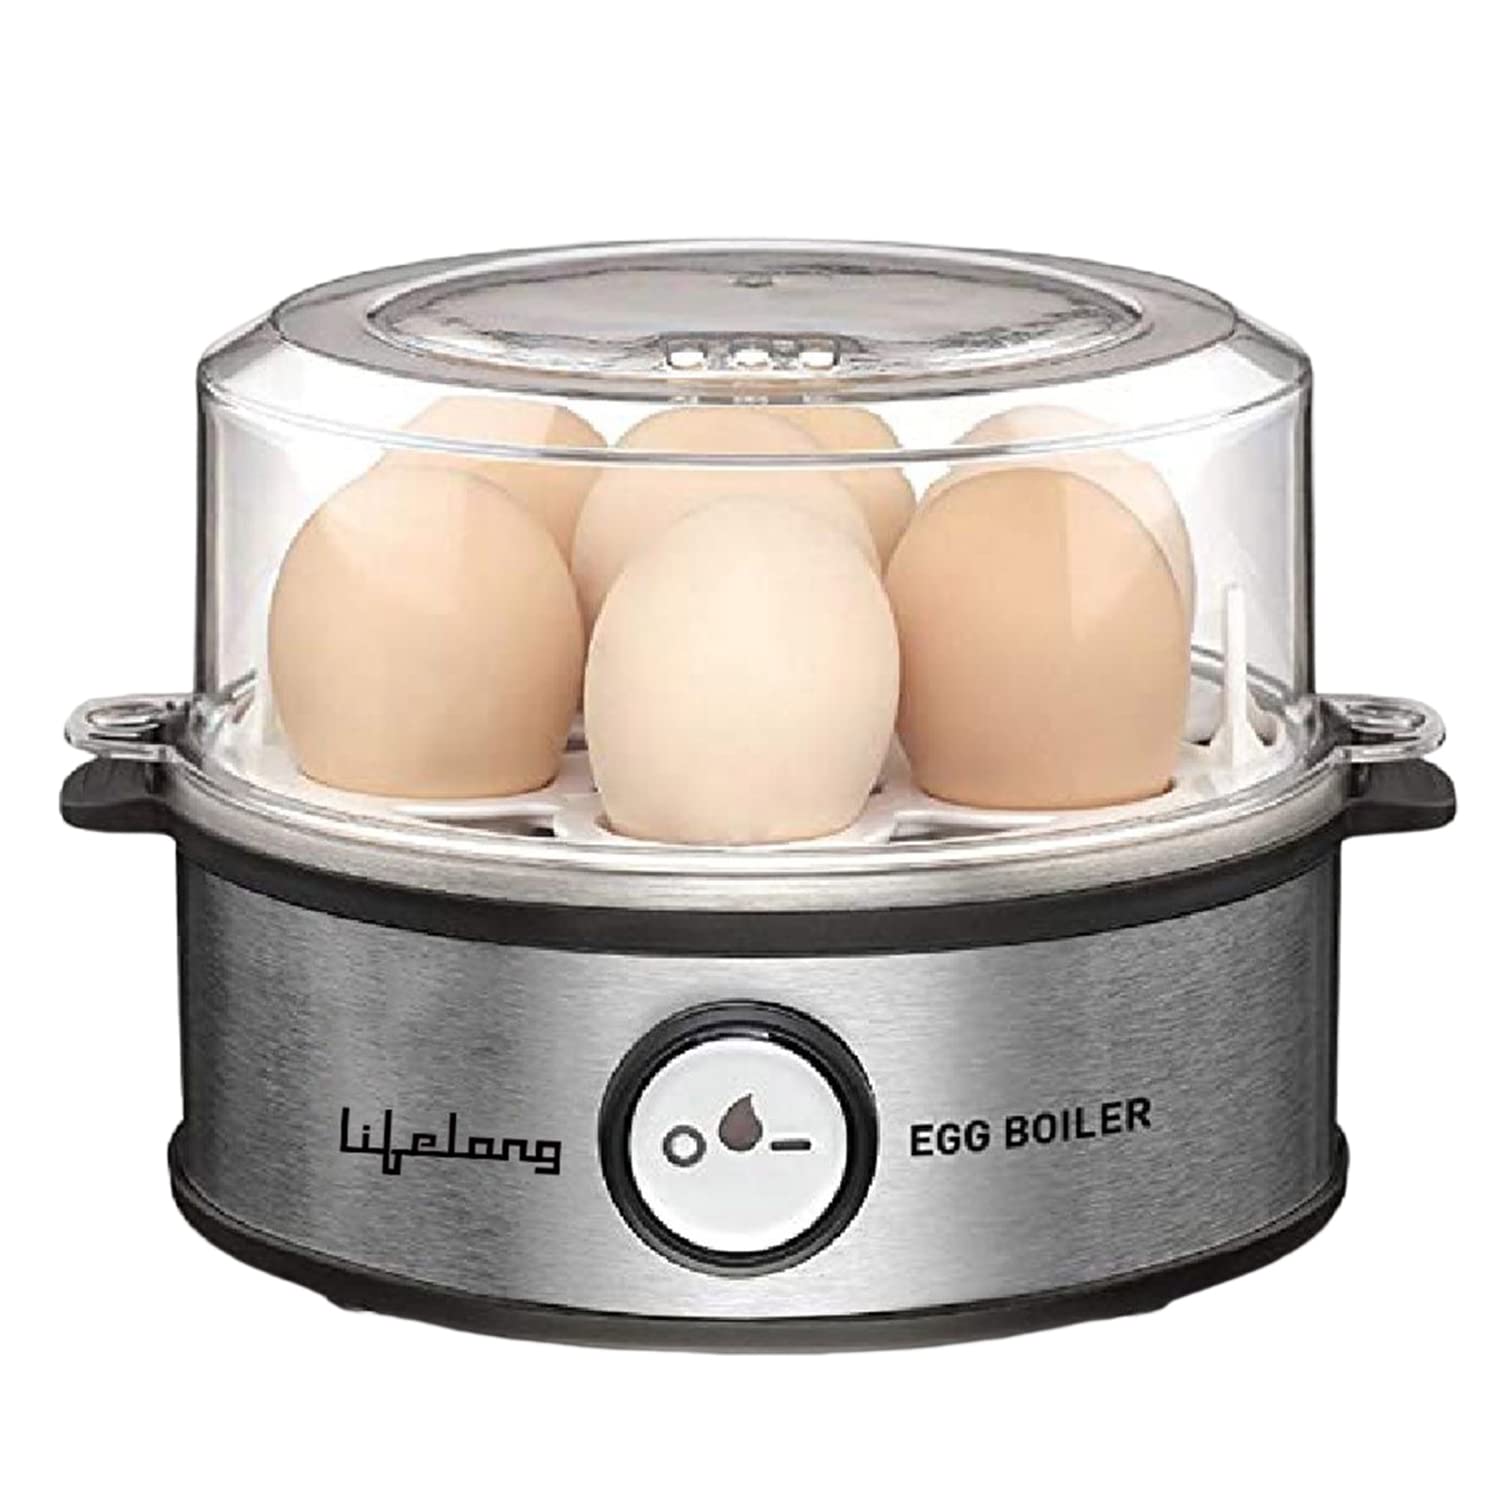 Lifelong Egg Boiler 360-Watt (Transparent and Silver Grey), Boil 7 eggs